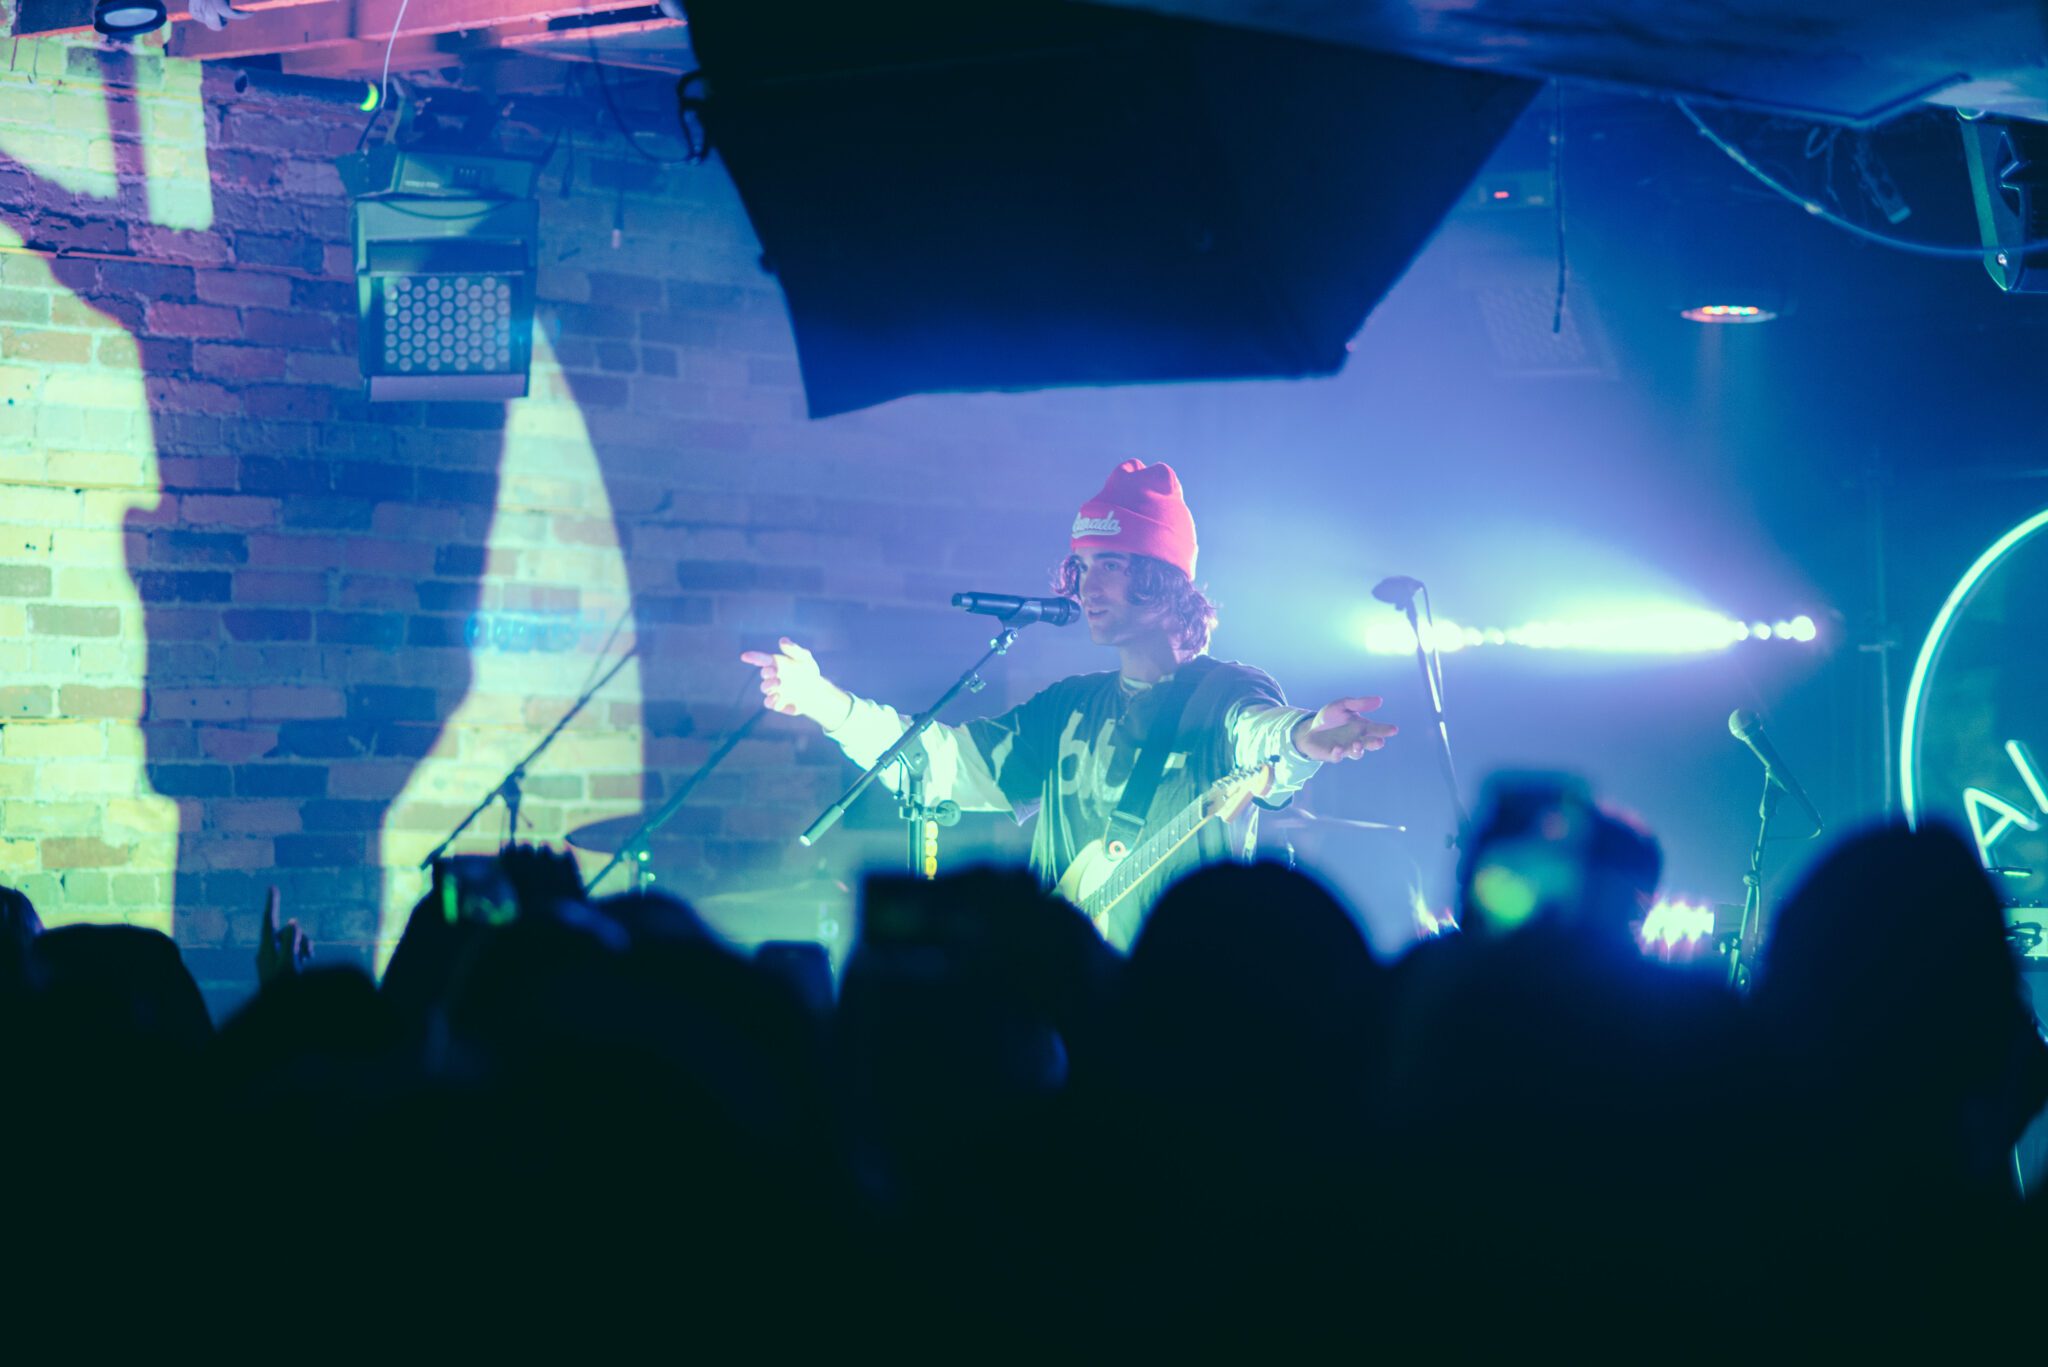 Alexander 23 performing at Velvet Underground in Toronto